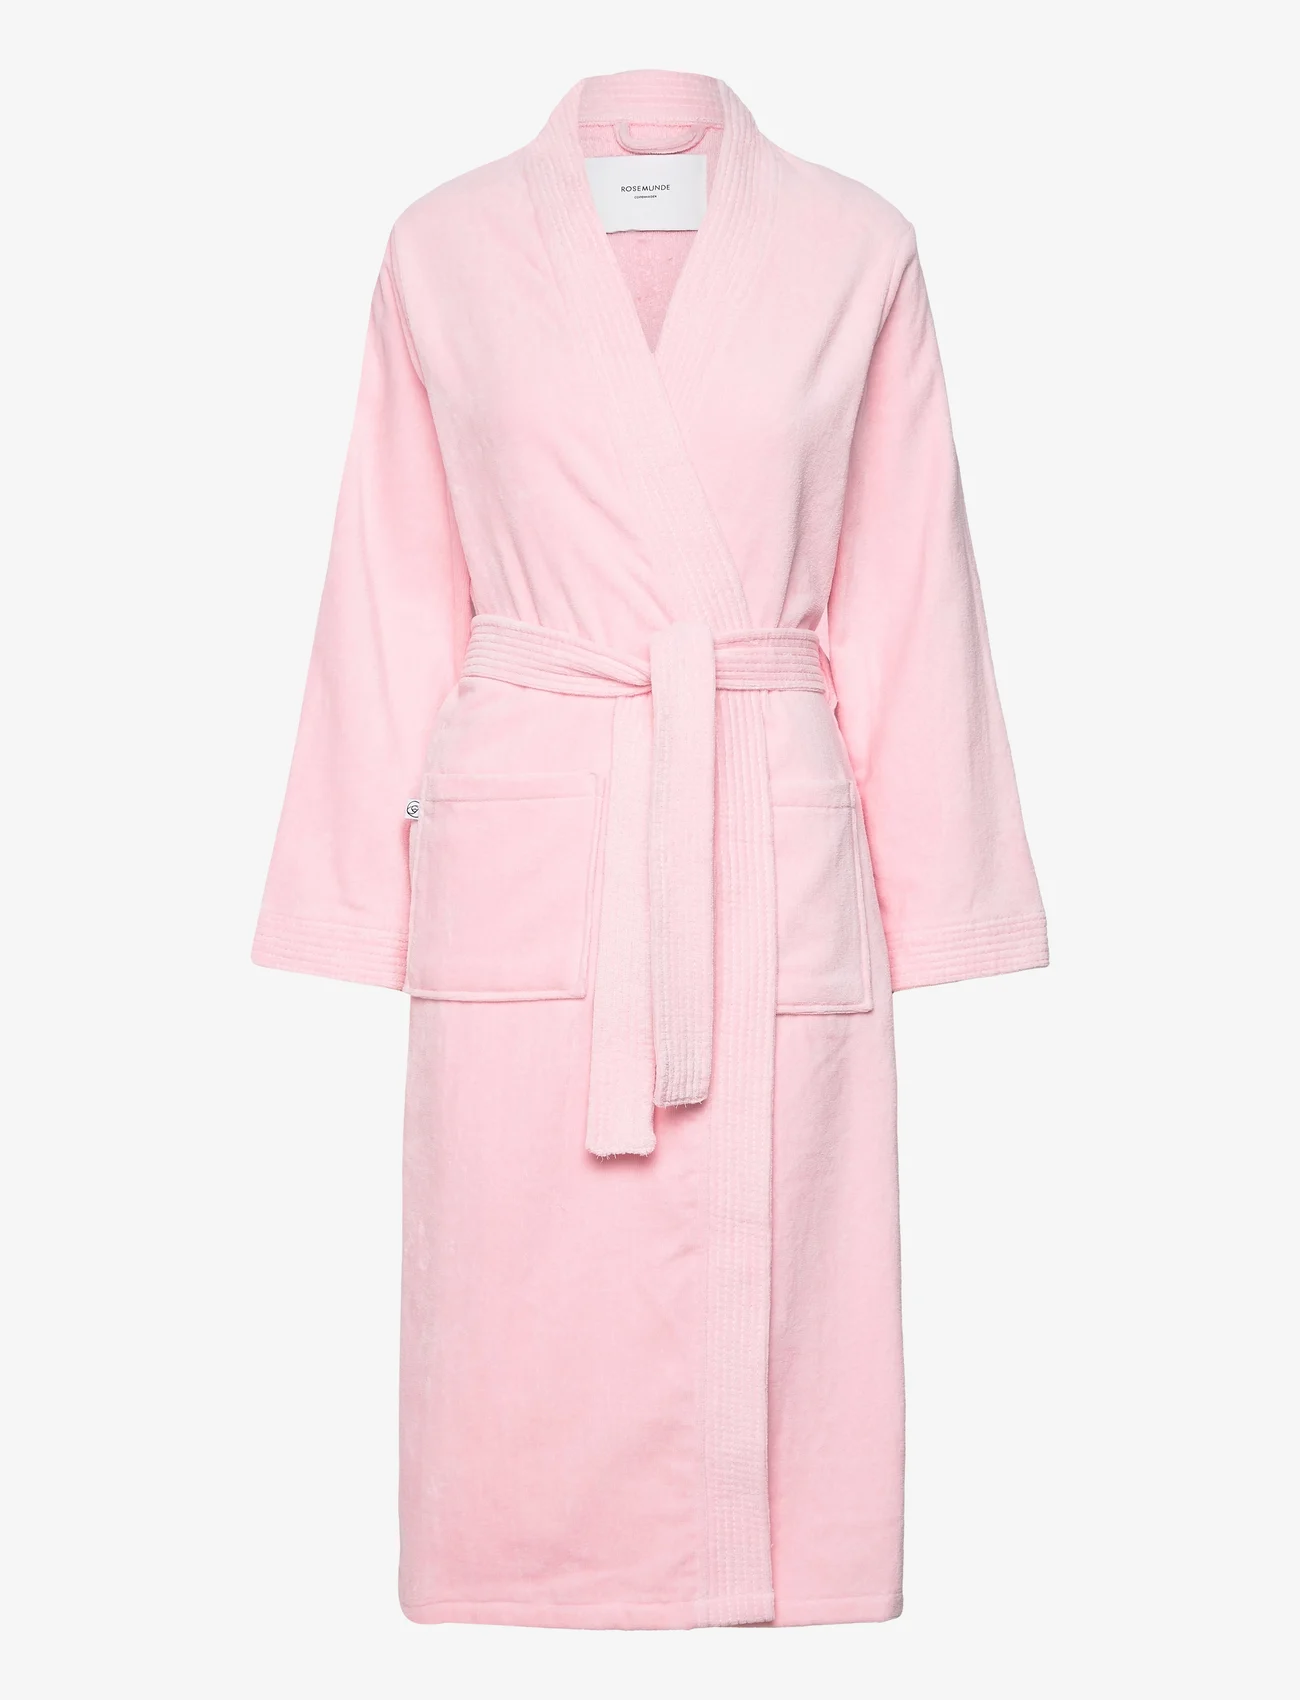 Rosemunde - Organic robe - kylpytakit - candy pink - 0